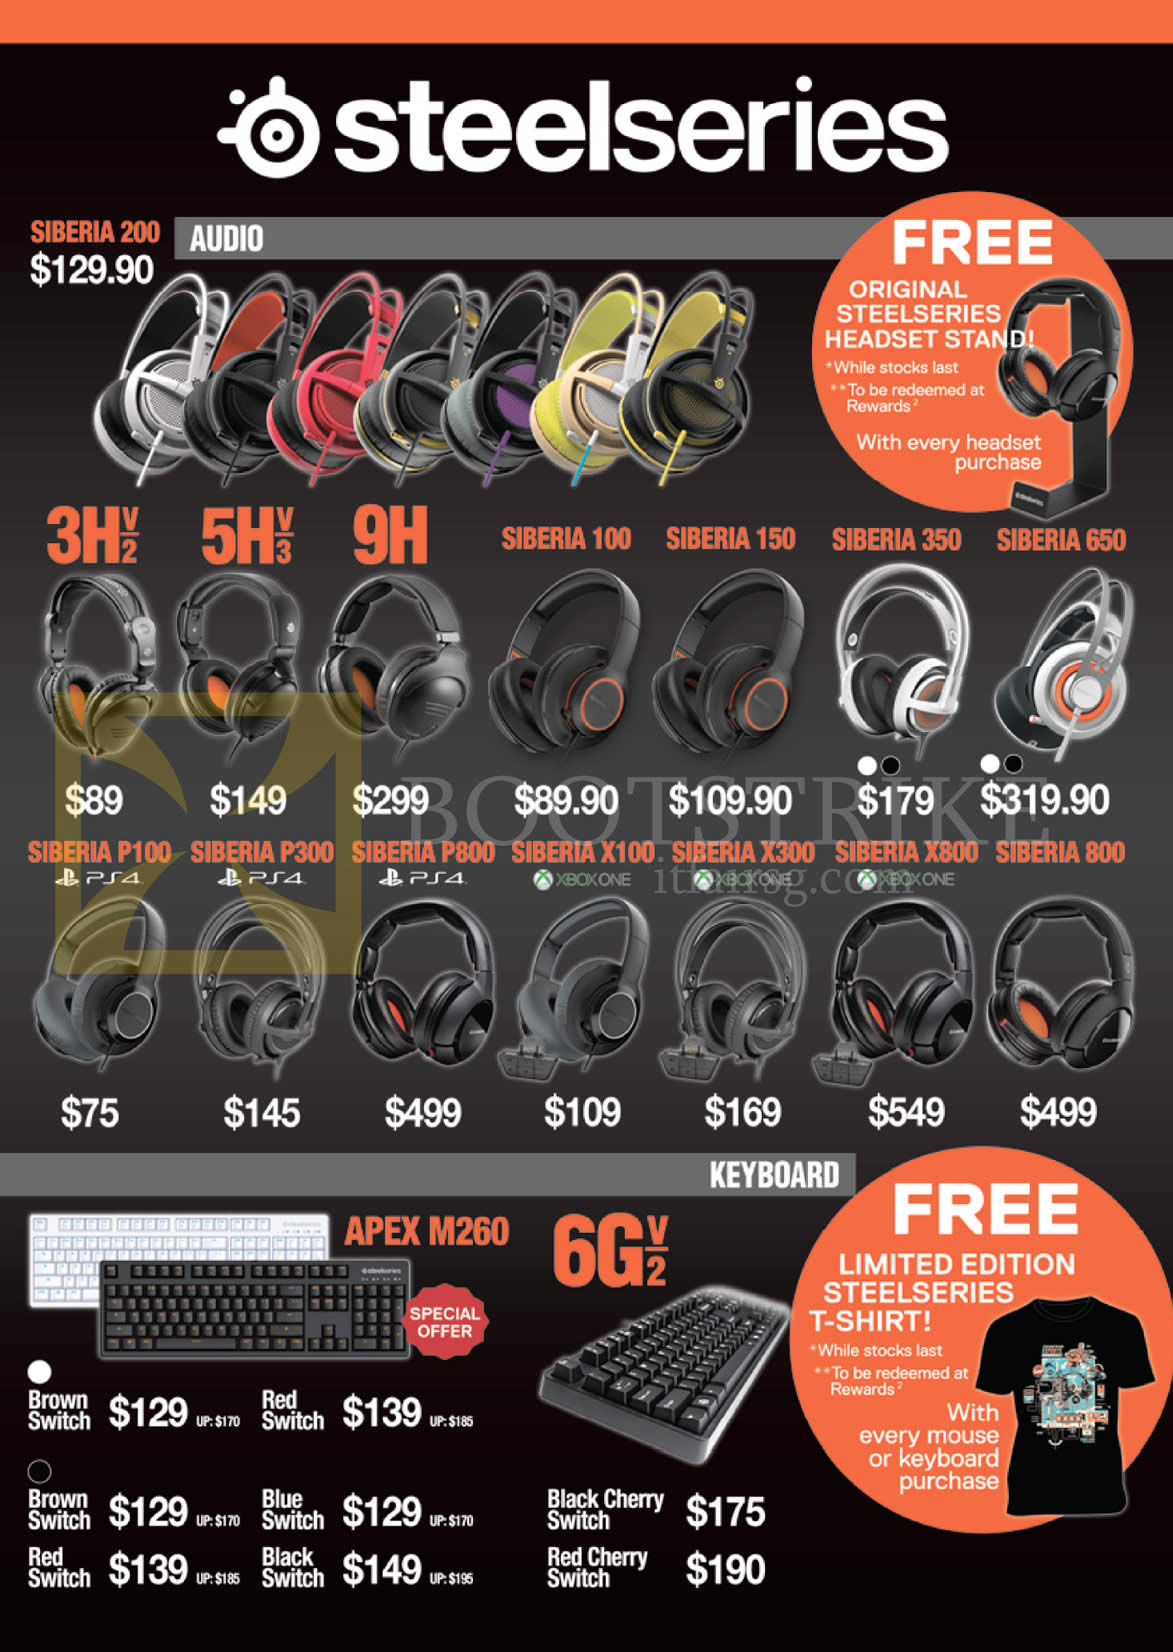 PC SHOW 2016 price list image brochure of Steelseries Cybermind Headphones, Keyboards, 3HV2, 5HV3, 9H, Siberia 100, 150, 350, 650, P100, P300, P800, X100, X300, X800, 800, Apex M260, 6GV2